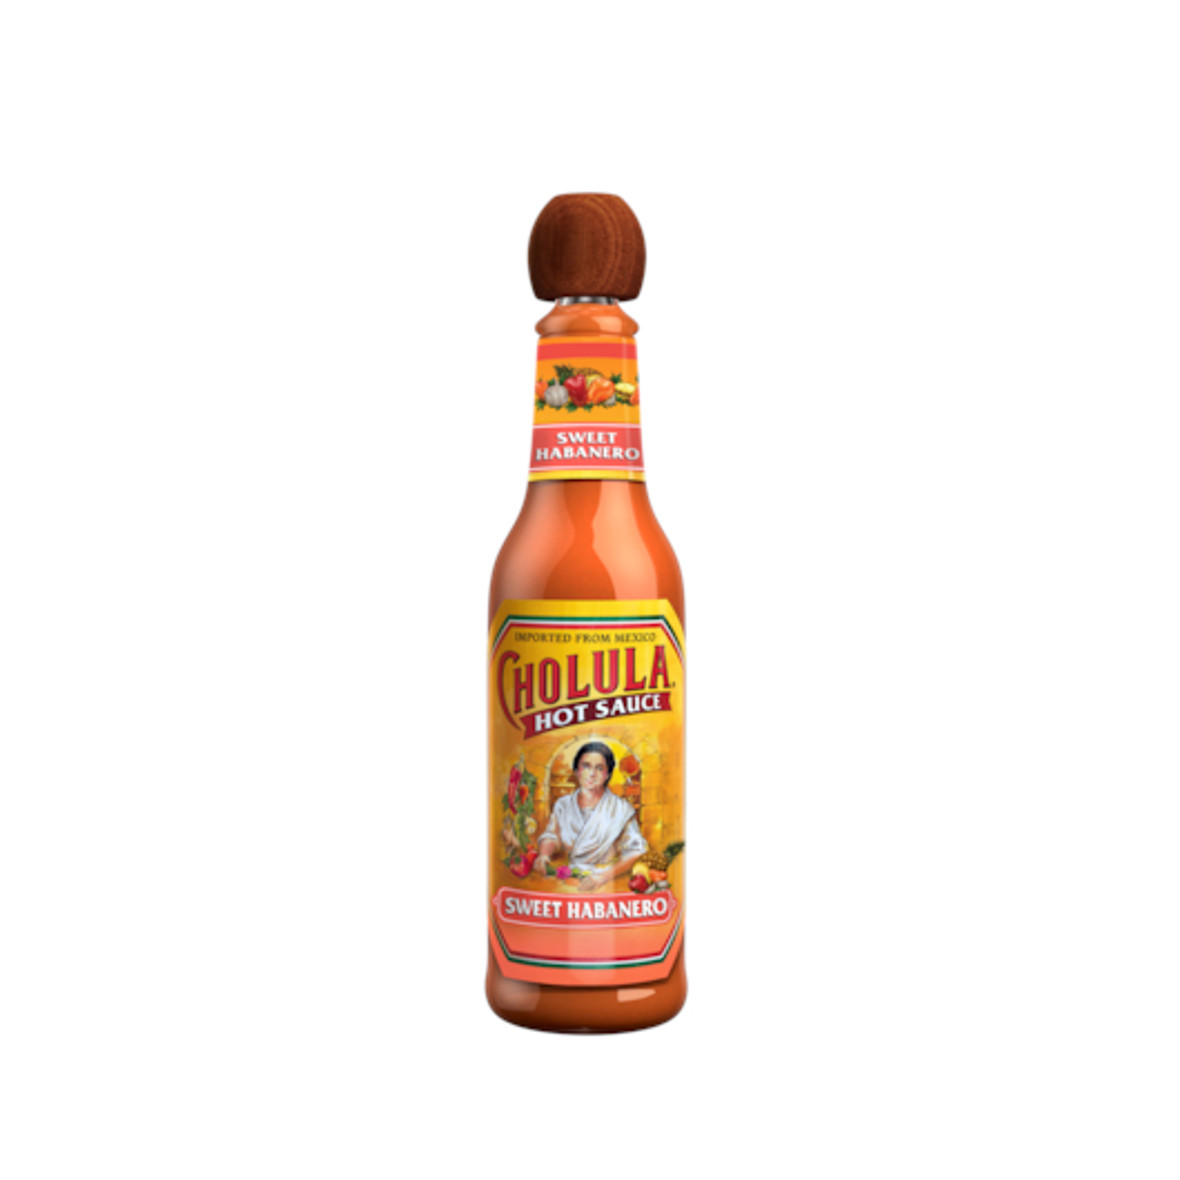 Cholula Sweet Habanero Hot Sauce Bottle, 5 Fluid Ounce, 12 Per Case